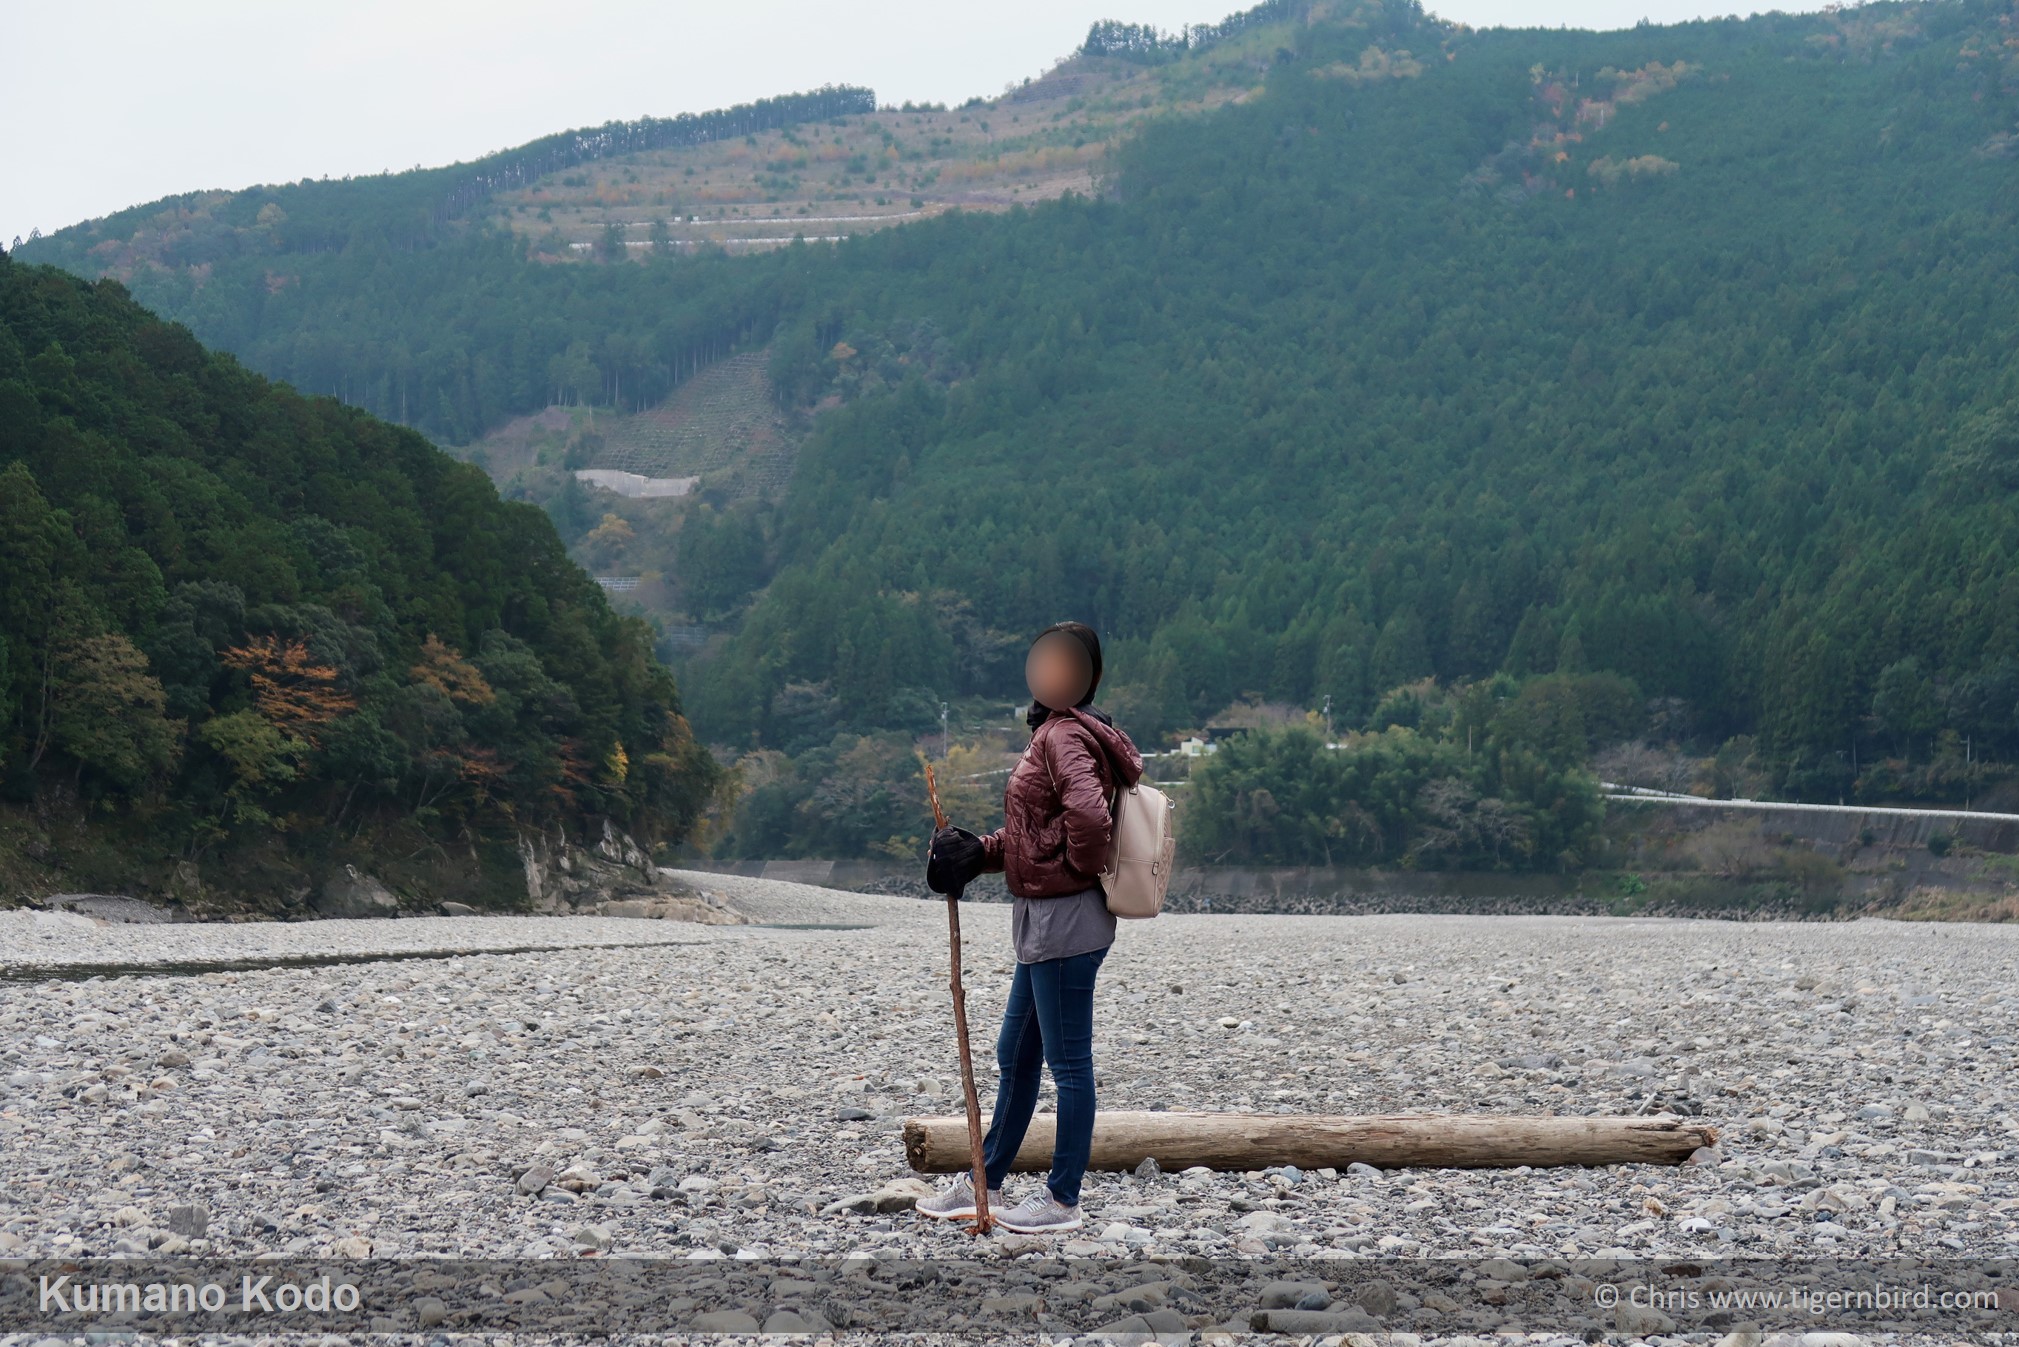 Hiker standing in stony Kumano riverbed near the Kumano Kodo trail in Japan